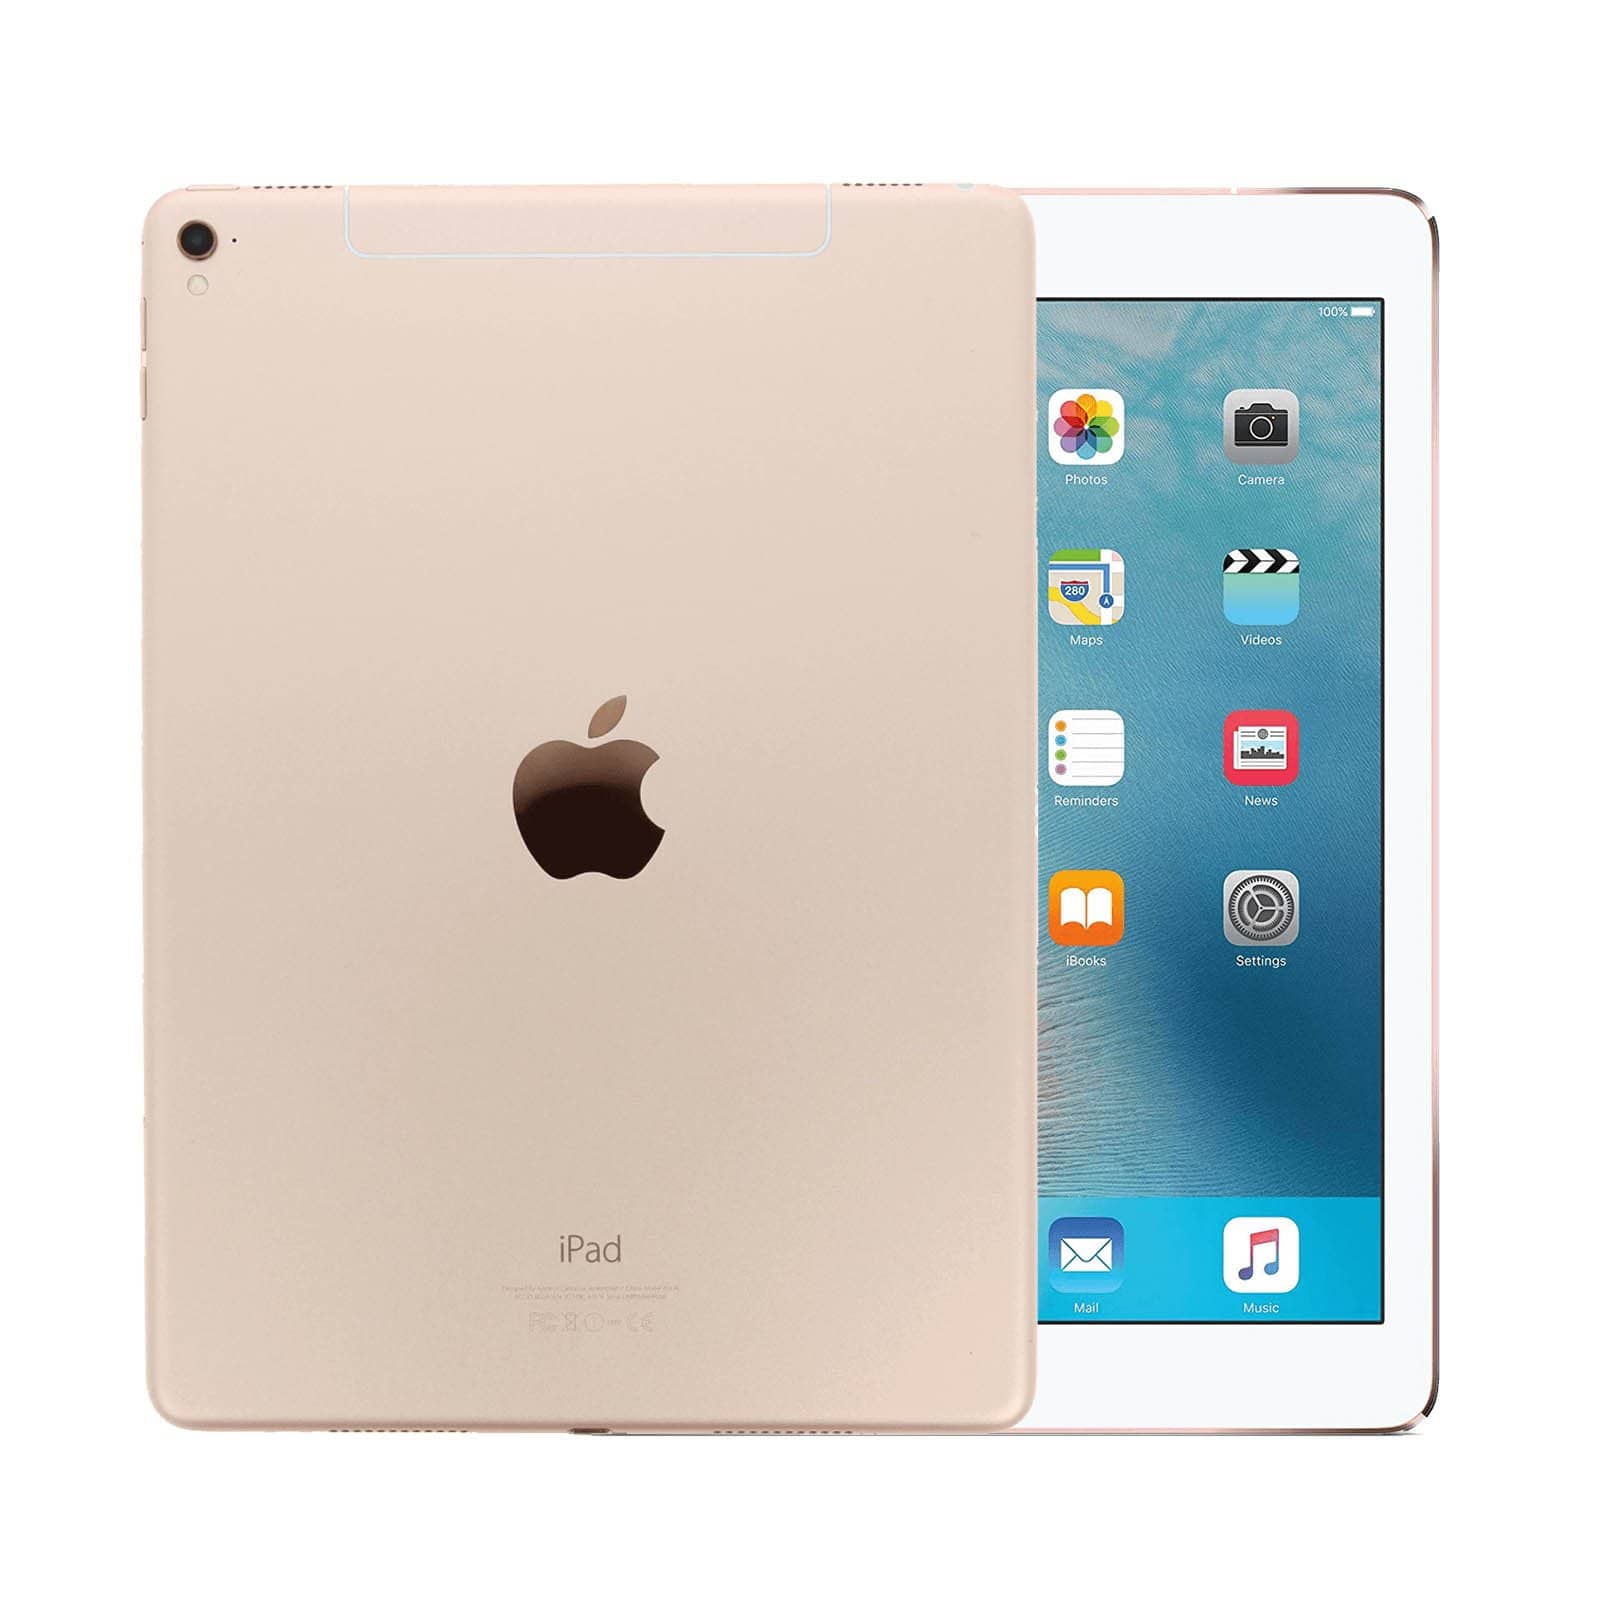 iPad Pro 9.7 Inch 128GB Gold Very Good - Unlocked 128GB Gold Very Good